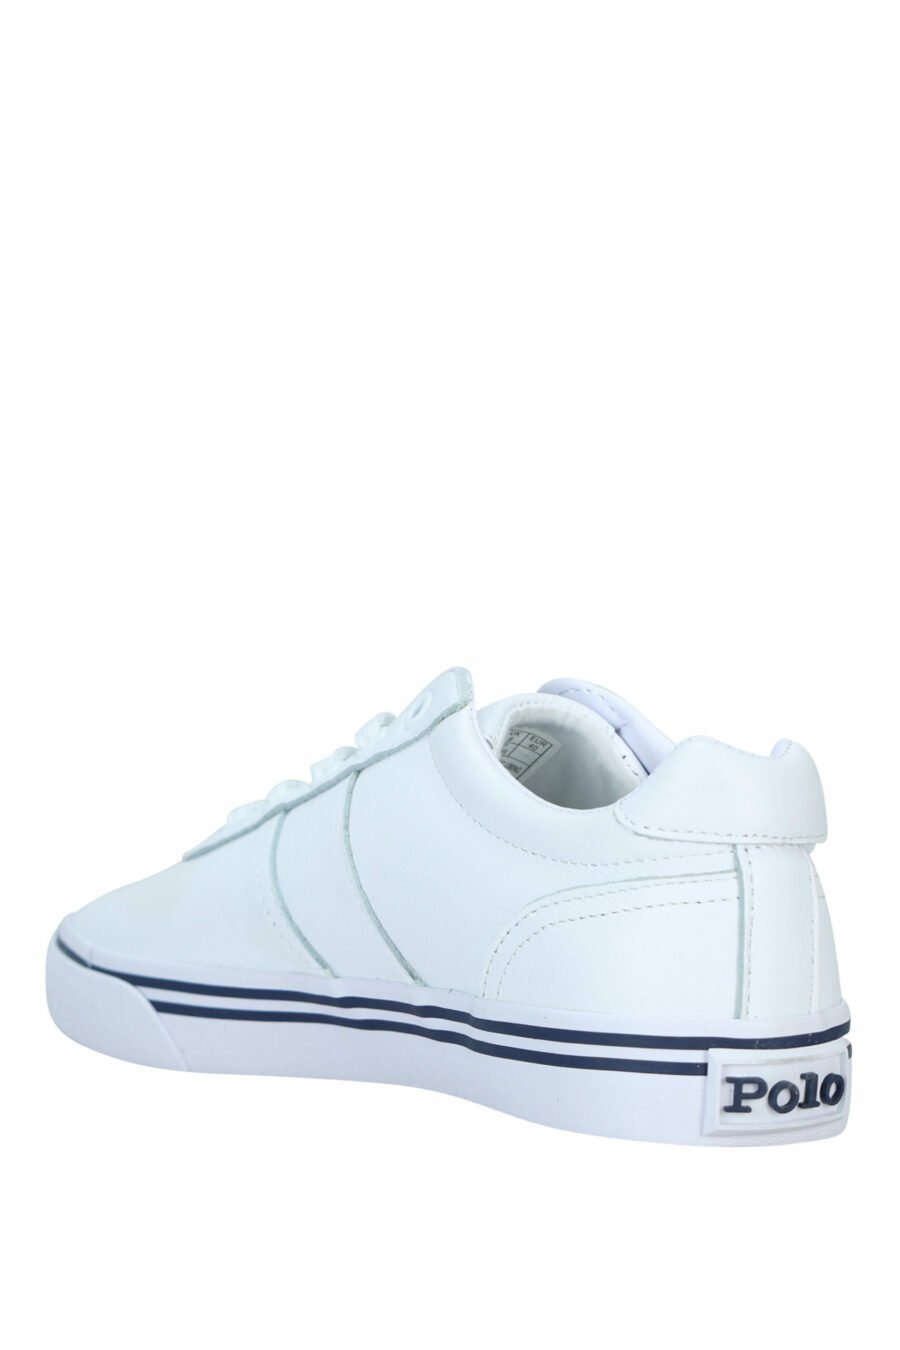 Zapatillas blancas con detalles azules y logo "polo" - 3615737560351 3 scaled